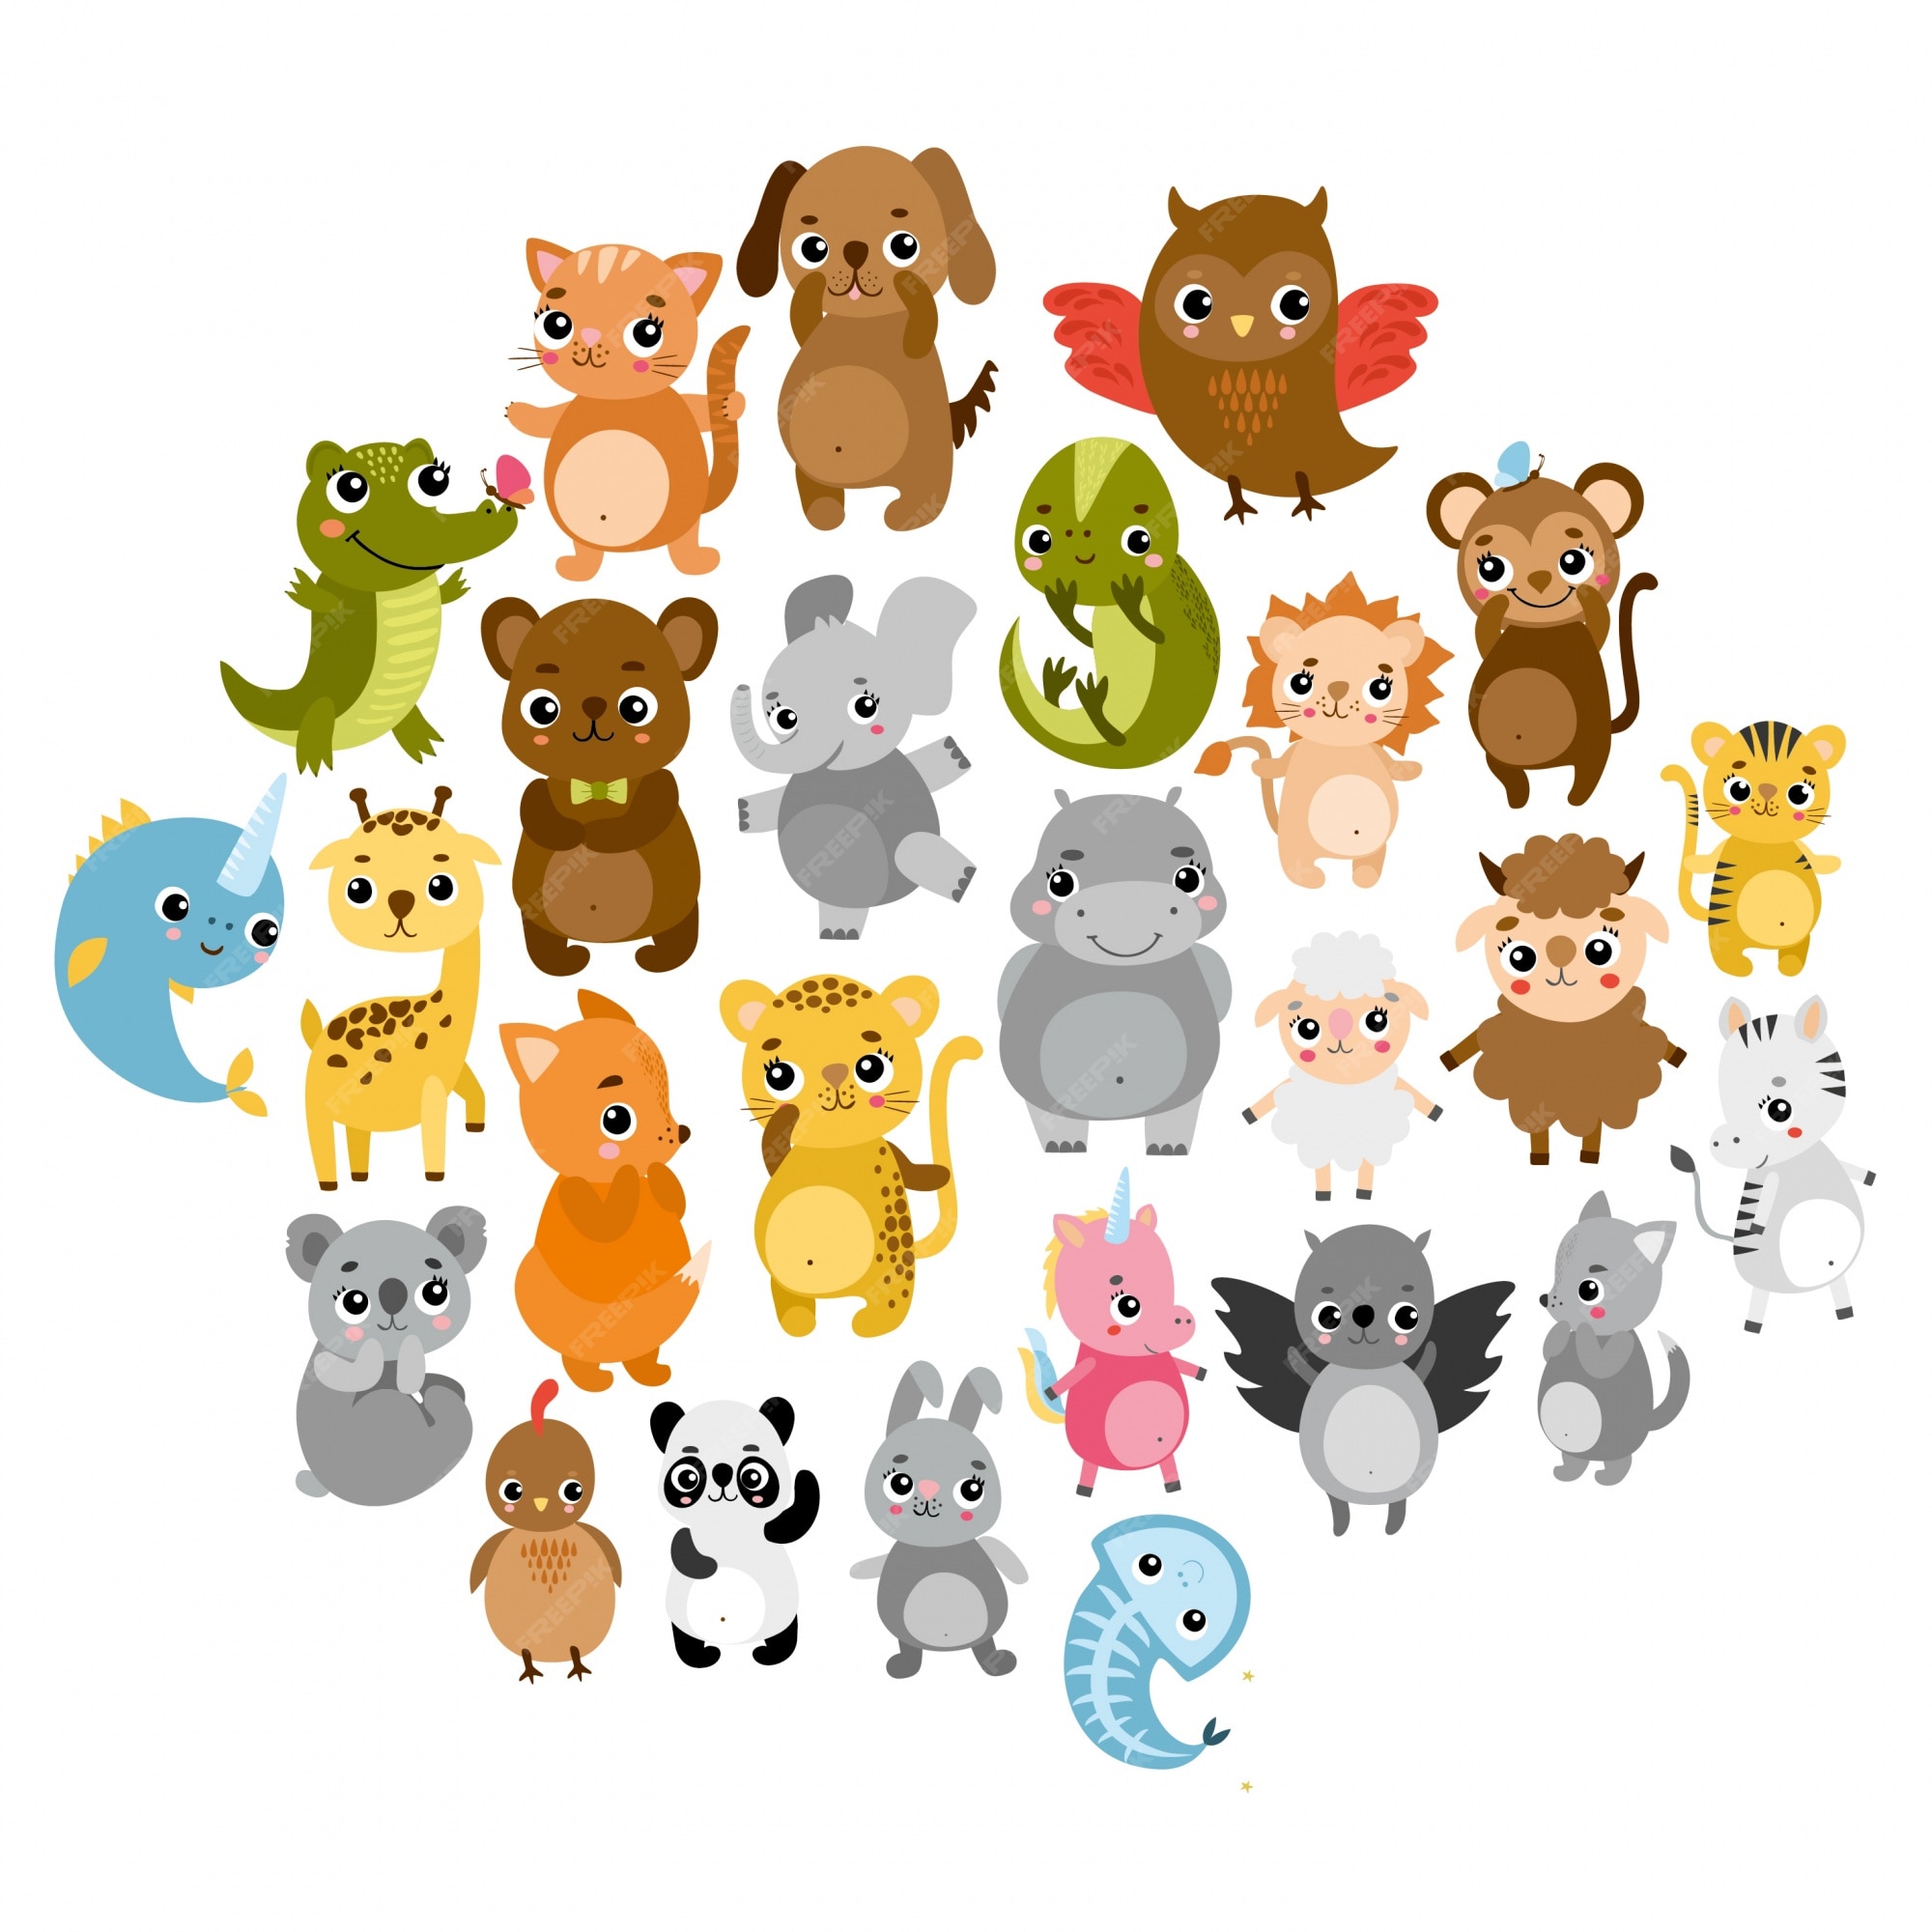 Cute Cartoon Animals Images - Free Download on Freepik